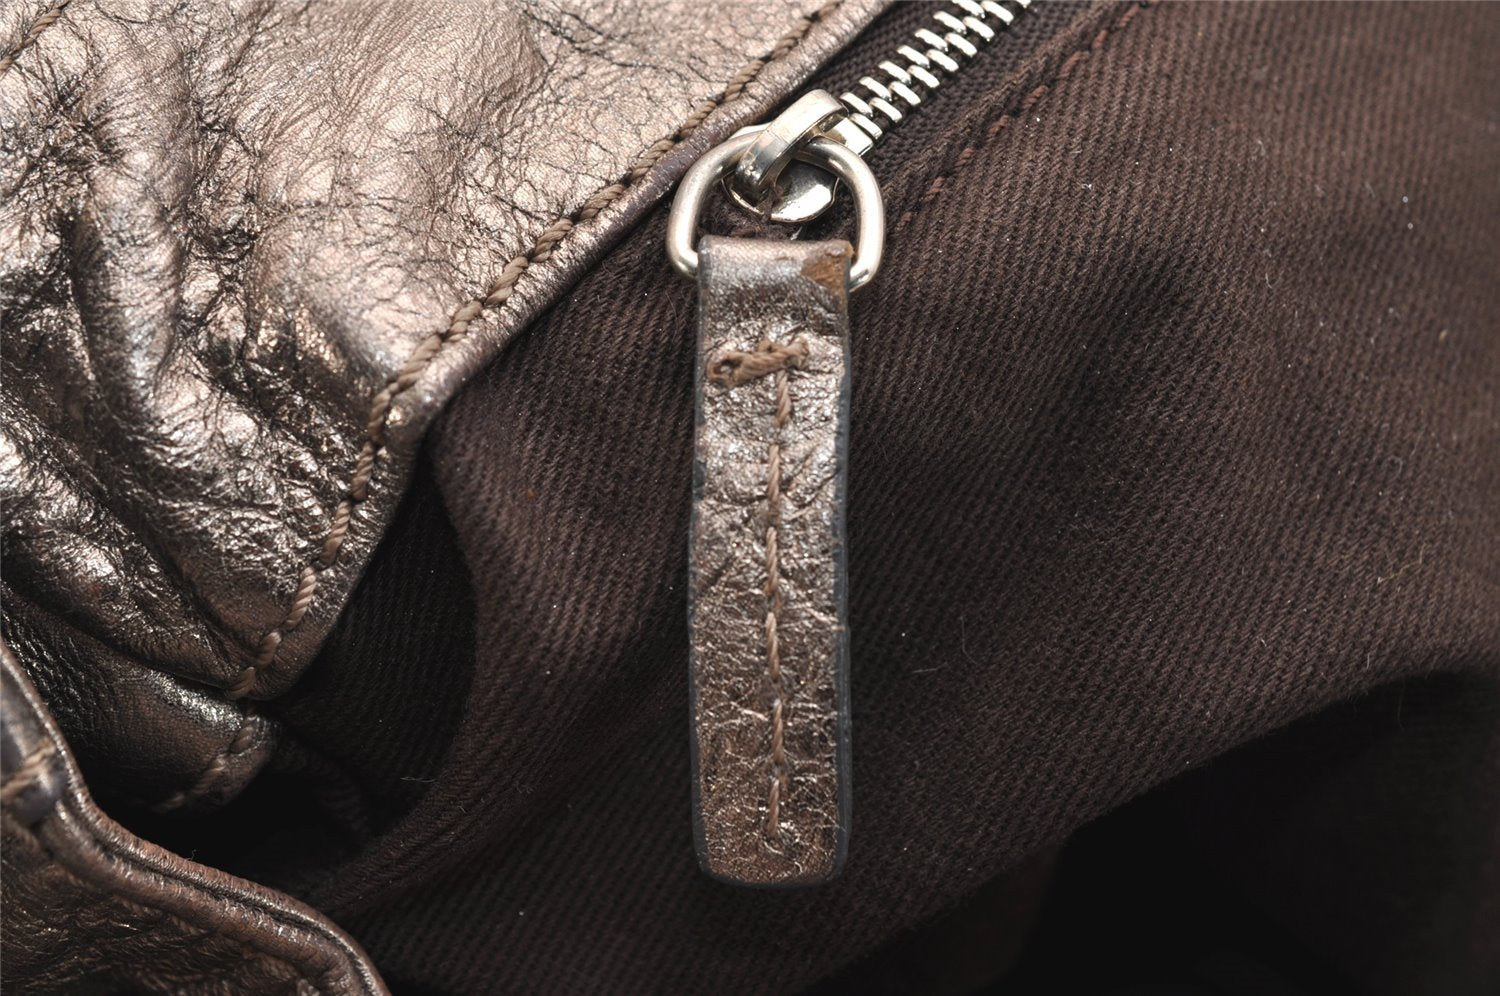 Authentic Chloe Vintage Paddington Leather Shoulder Hand Bag Gold 9260J